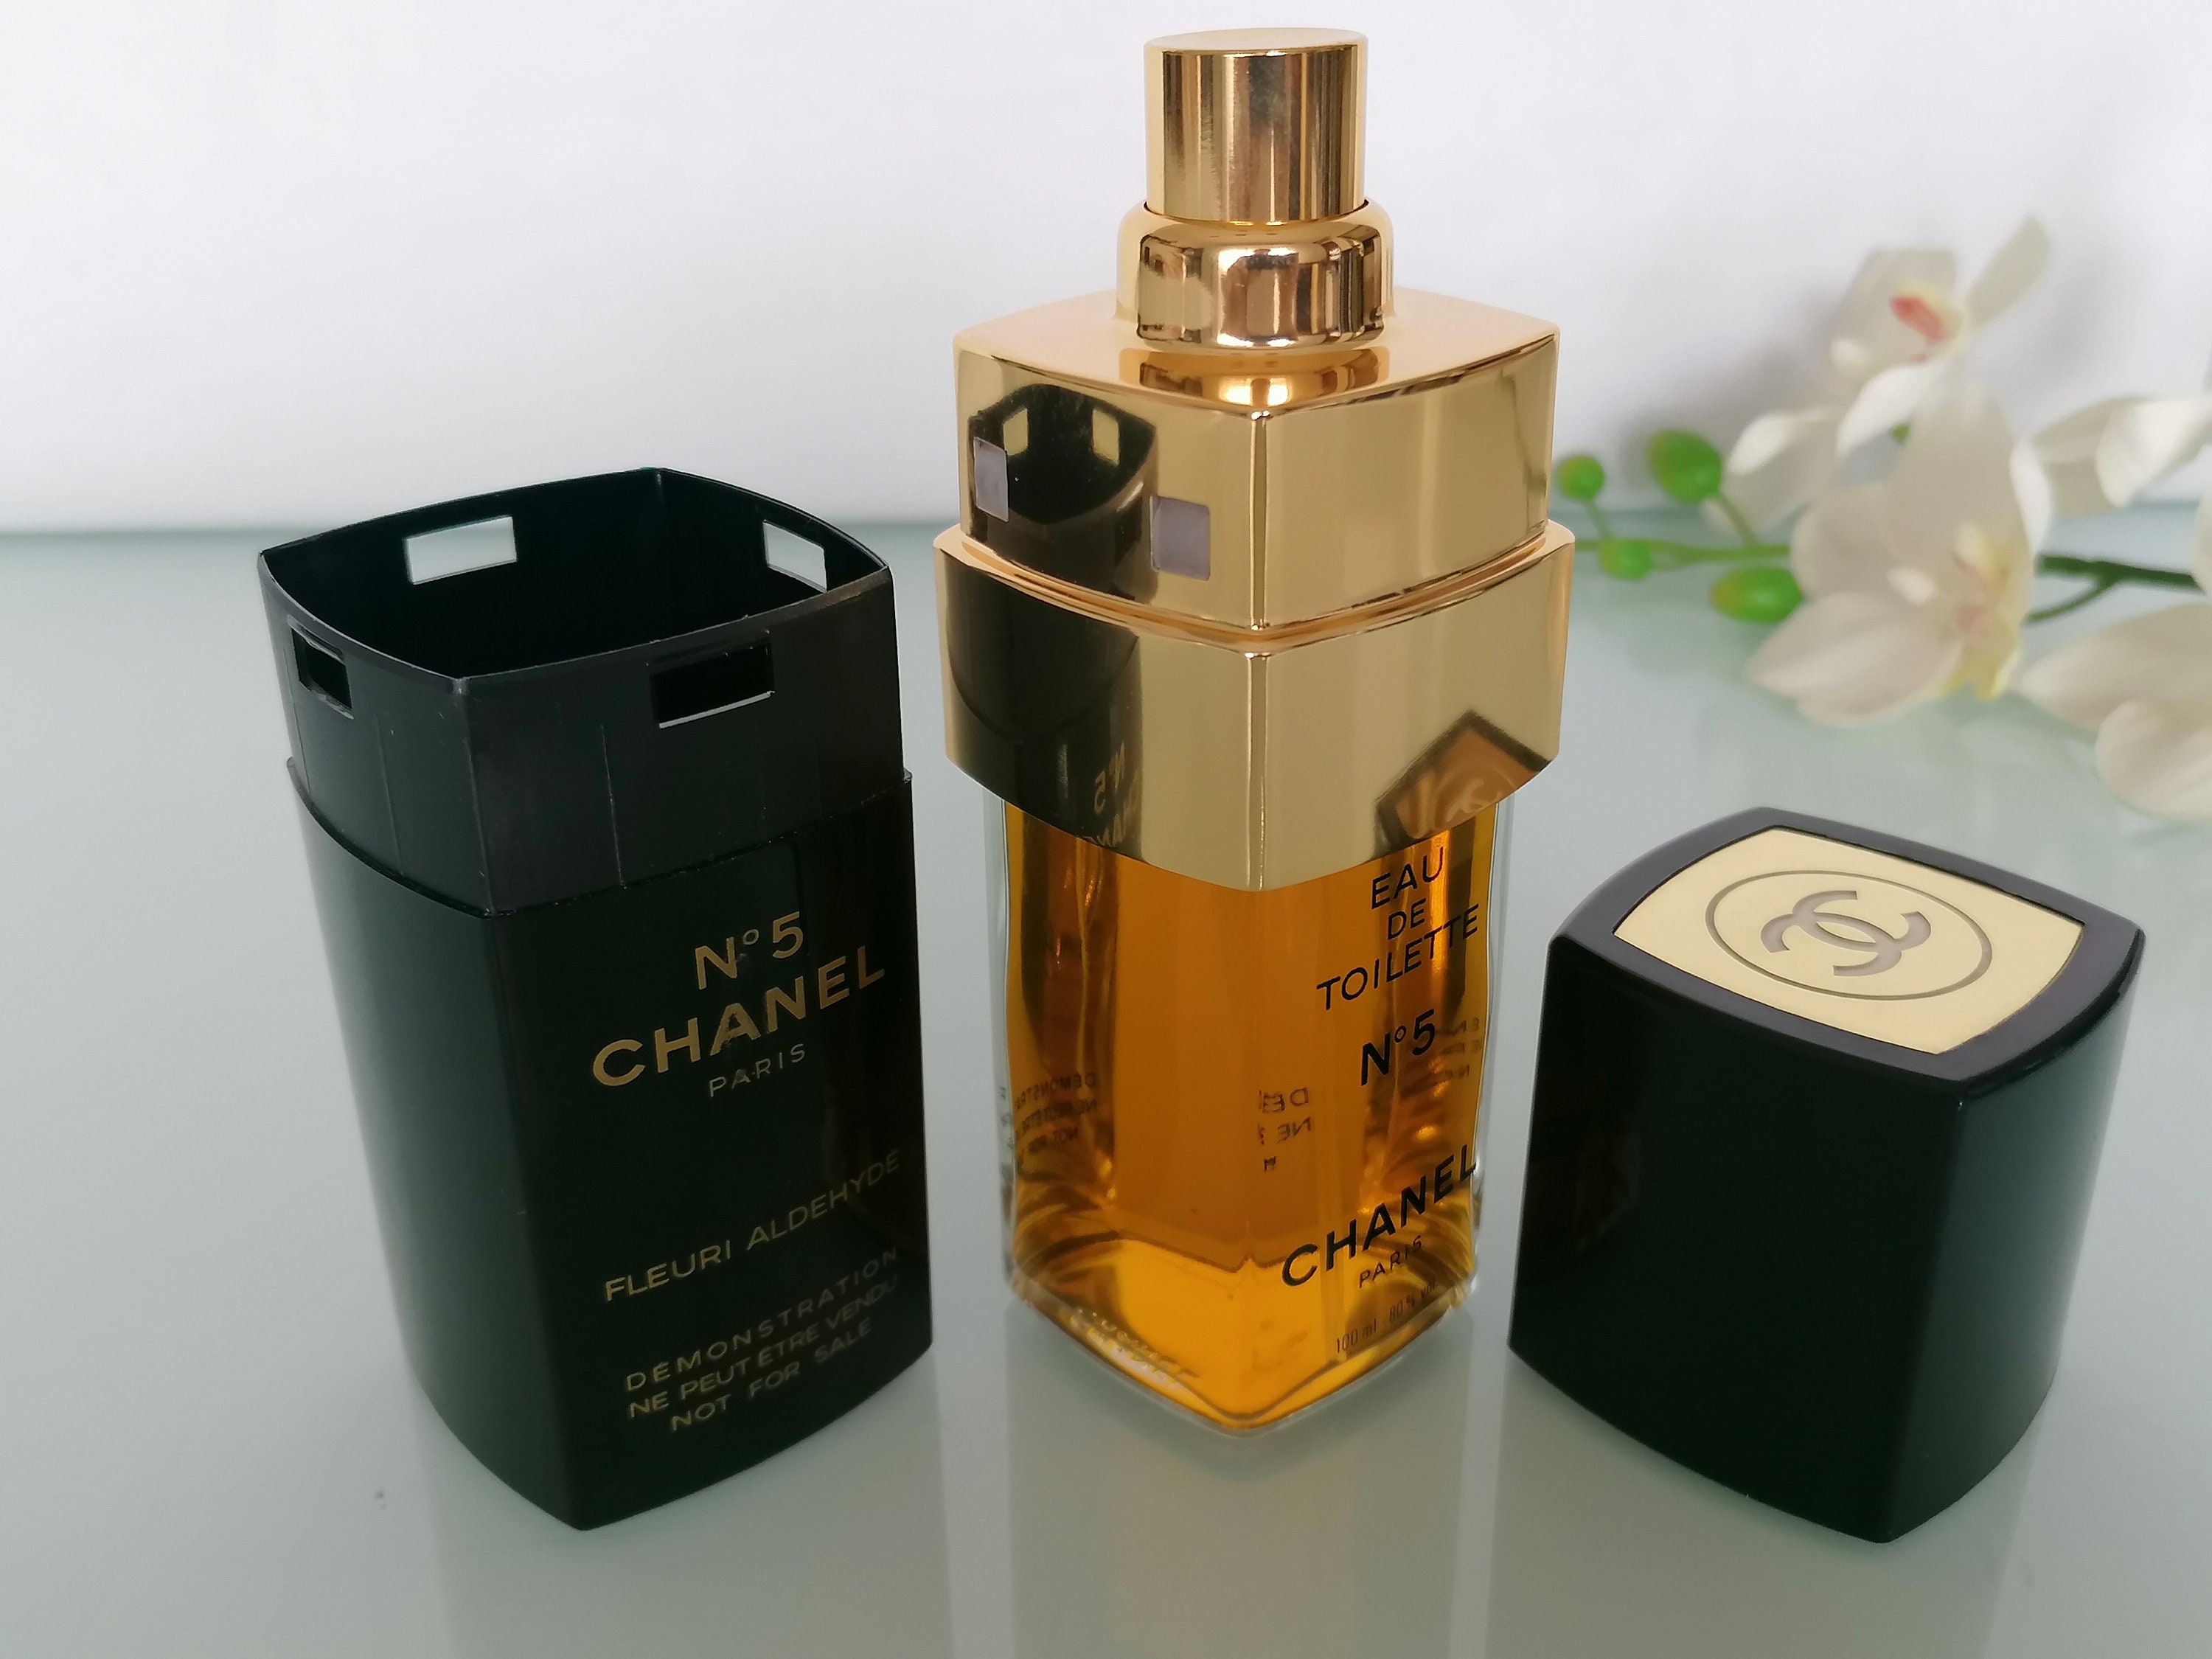 Chanel N 5 Fleuri Aldehyde Eau De Toiette Edt 100ml Recharge 